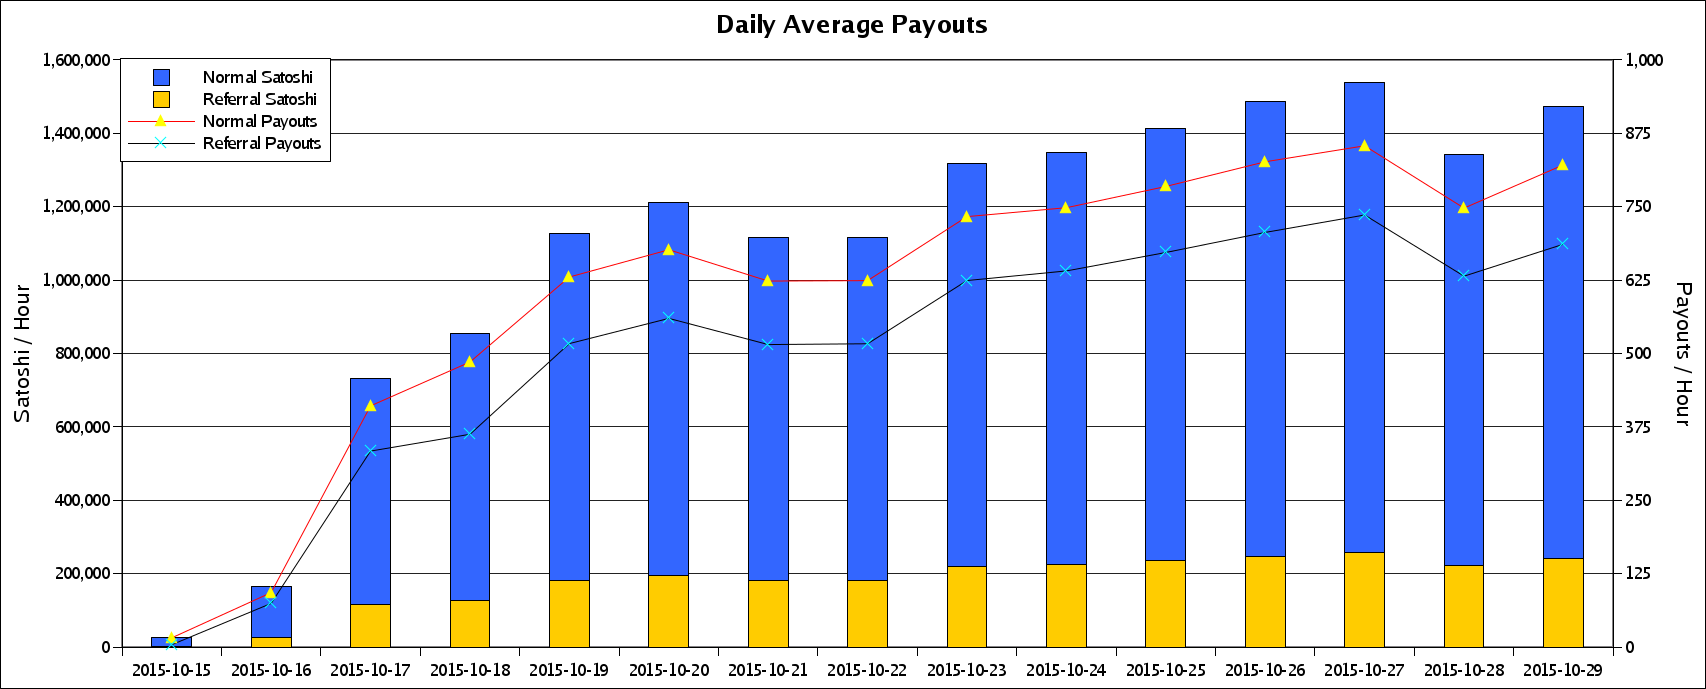 Daily Average Payouts